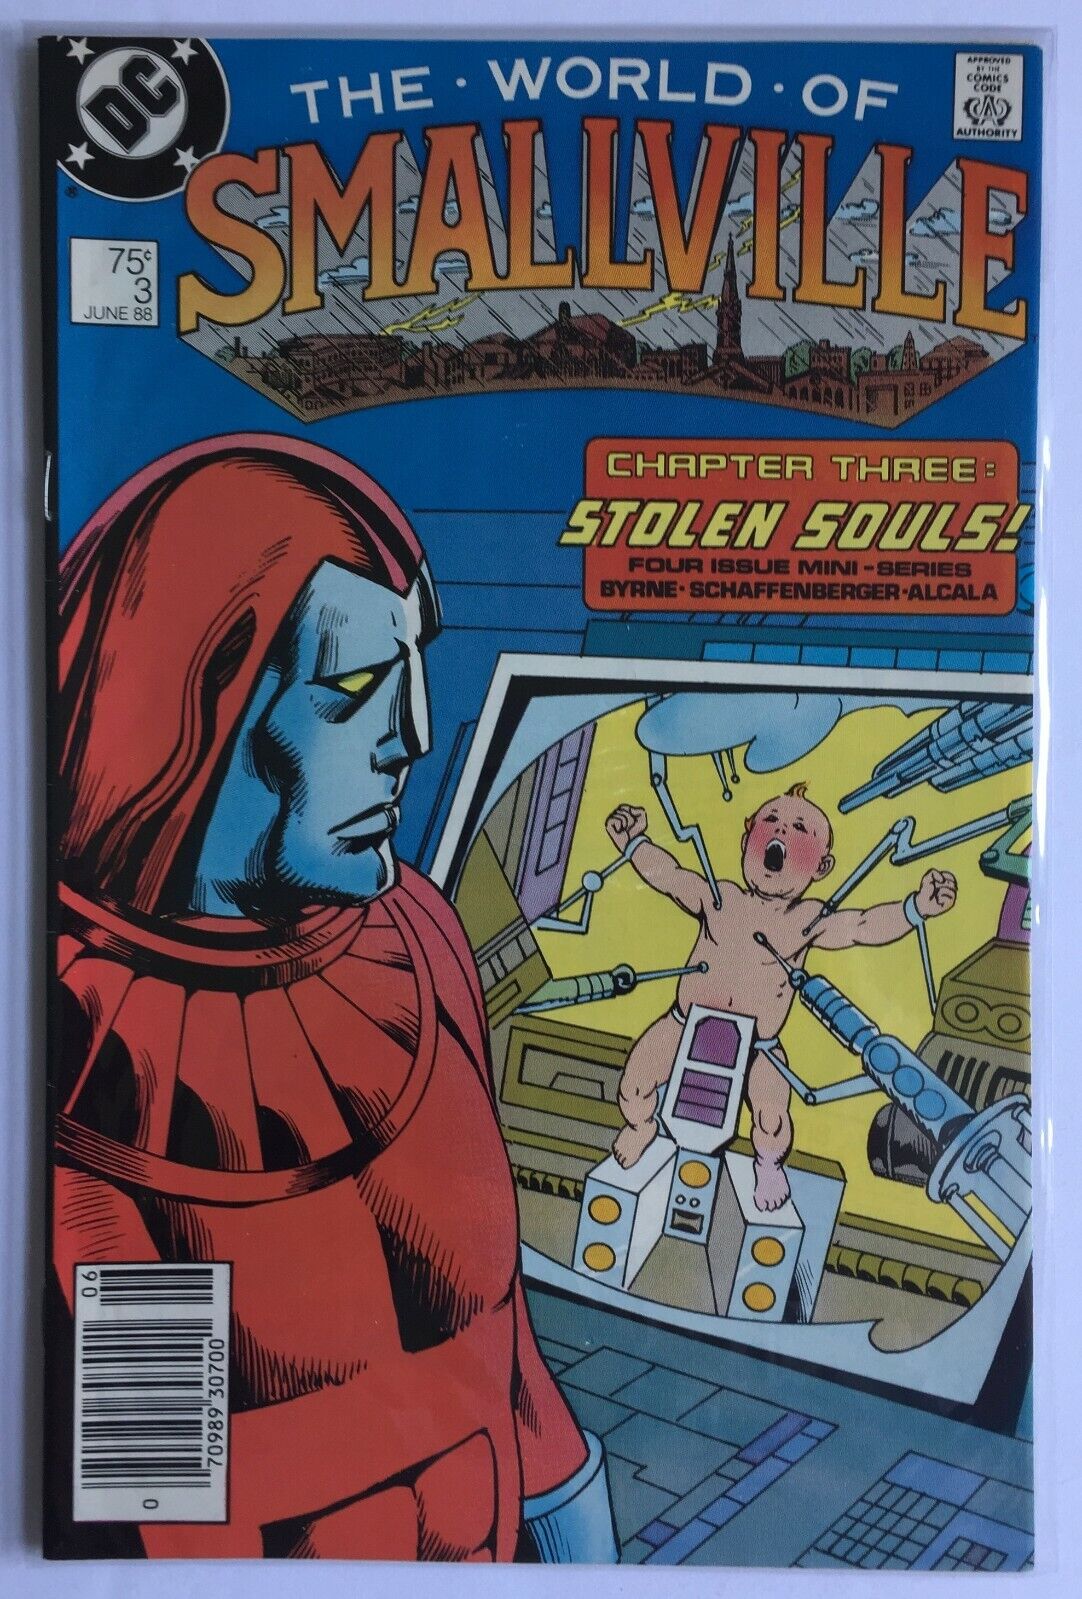 World of Smallville #3 (Jun 1988, DC)